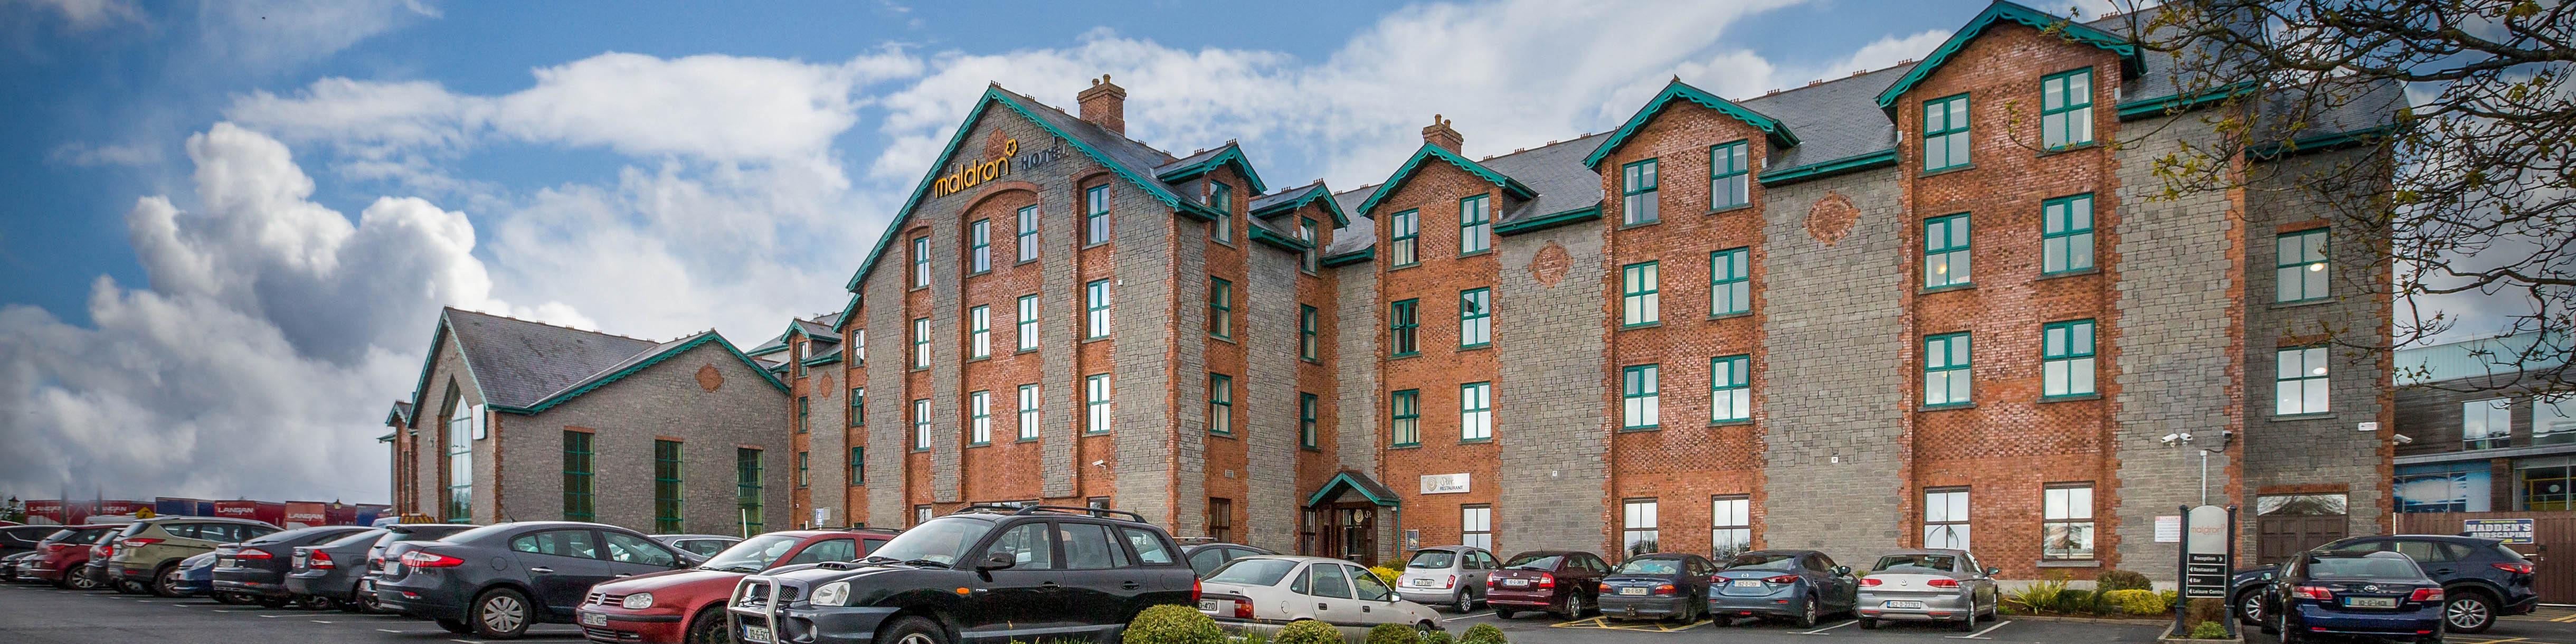 Maldron Hotel Oranmore Galway 6